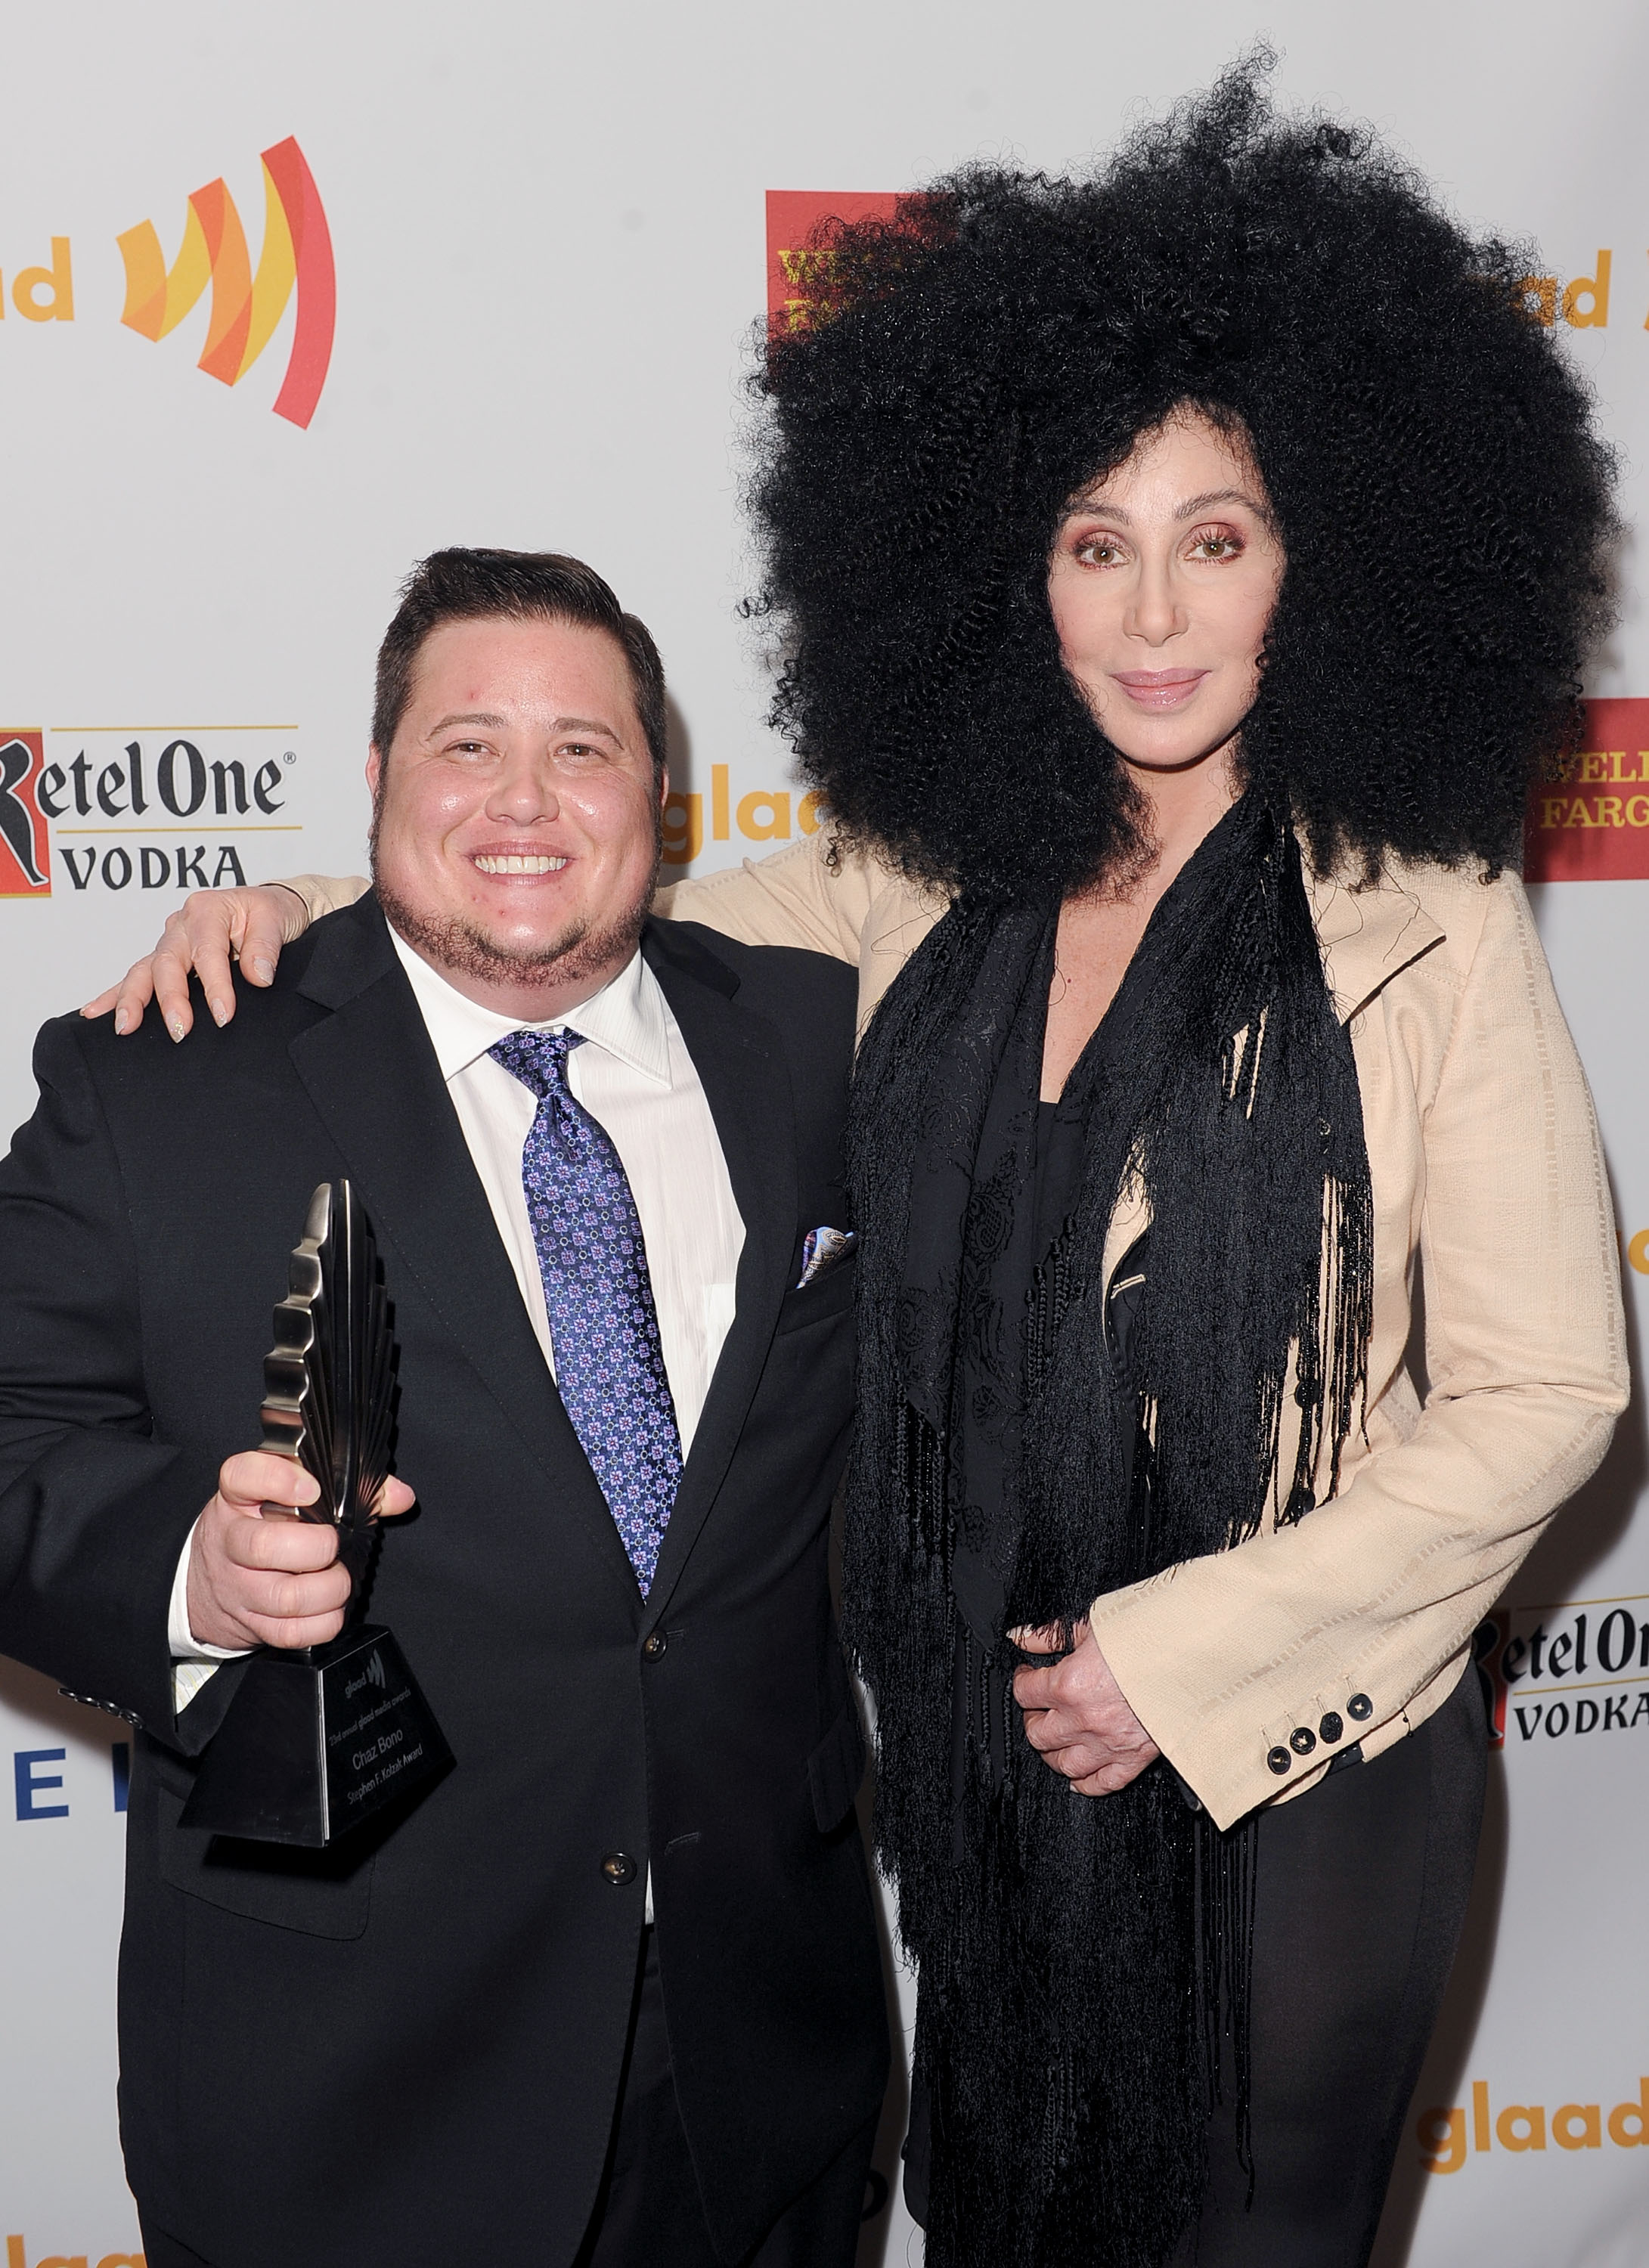 Chaz Bono und Cher bei den 23rd Annual GLAAD Media Awards in Los Angeles, Kalifornien, am 21. April 2012. | Quelle: Getty Images